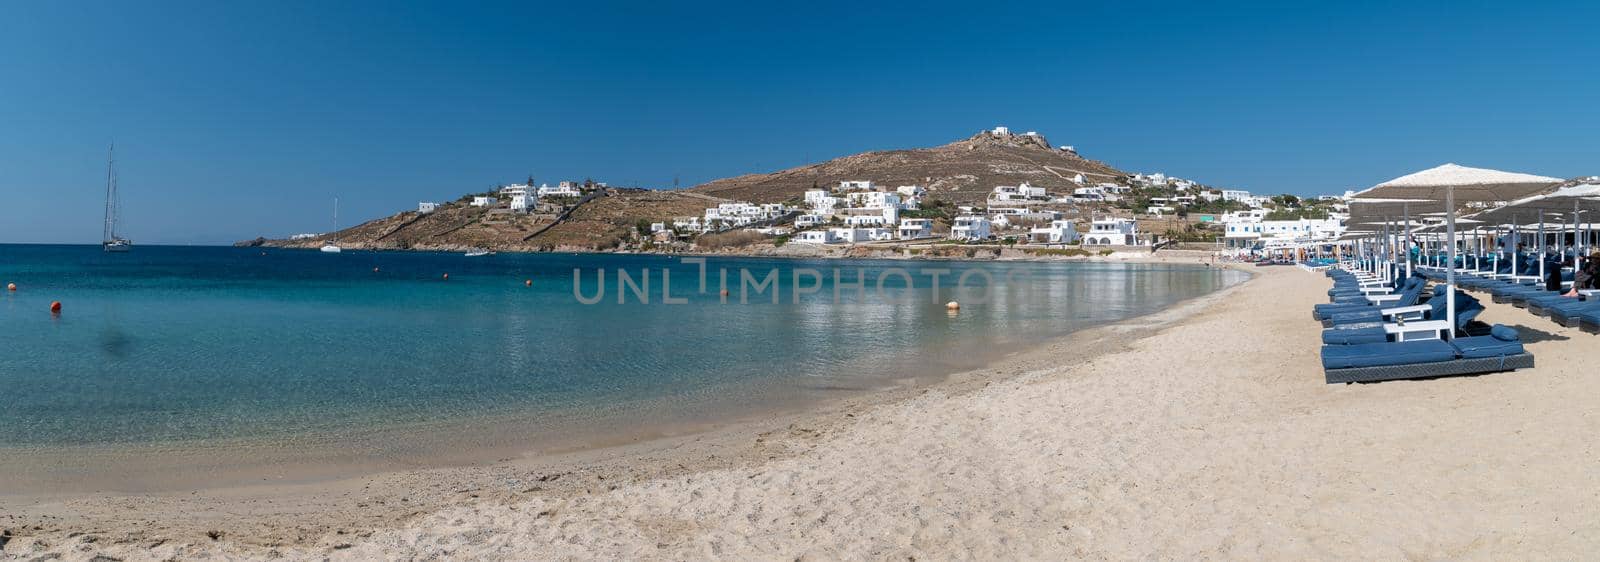 Ornos beach Mykonos island, famous Ornos beach organized with sun beds emerald clear water beach of Ornos in island of Mykonos, Cyclades, Greece. 